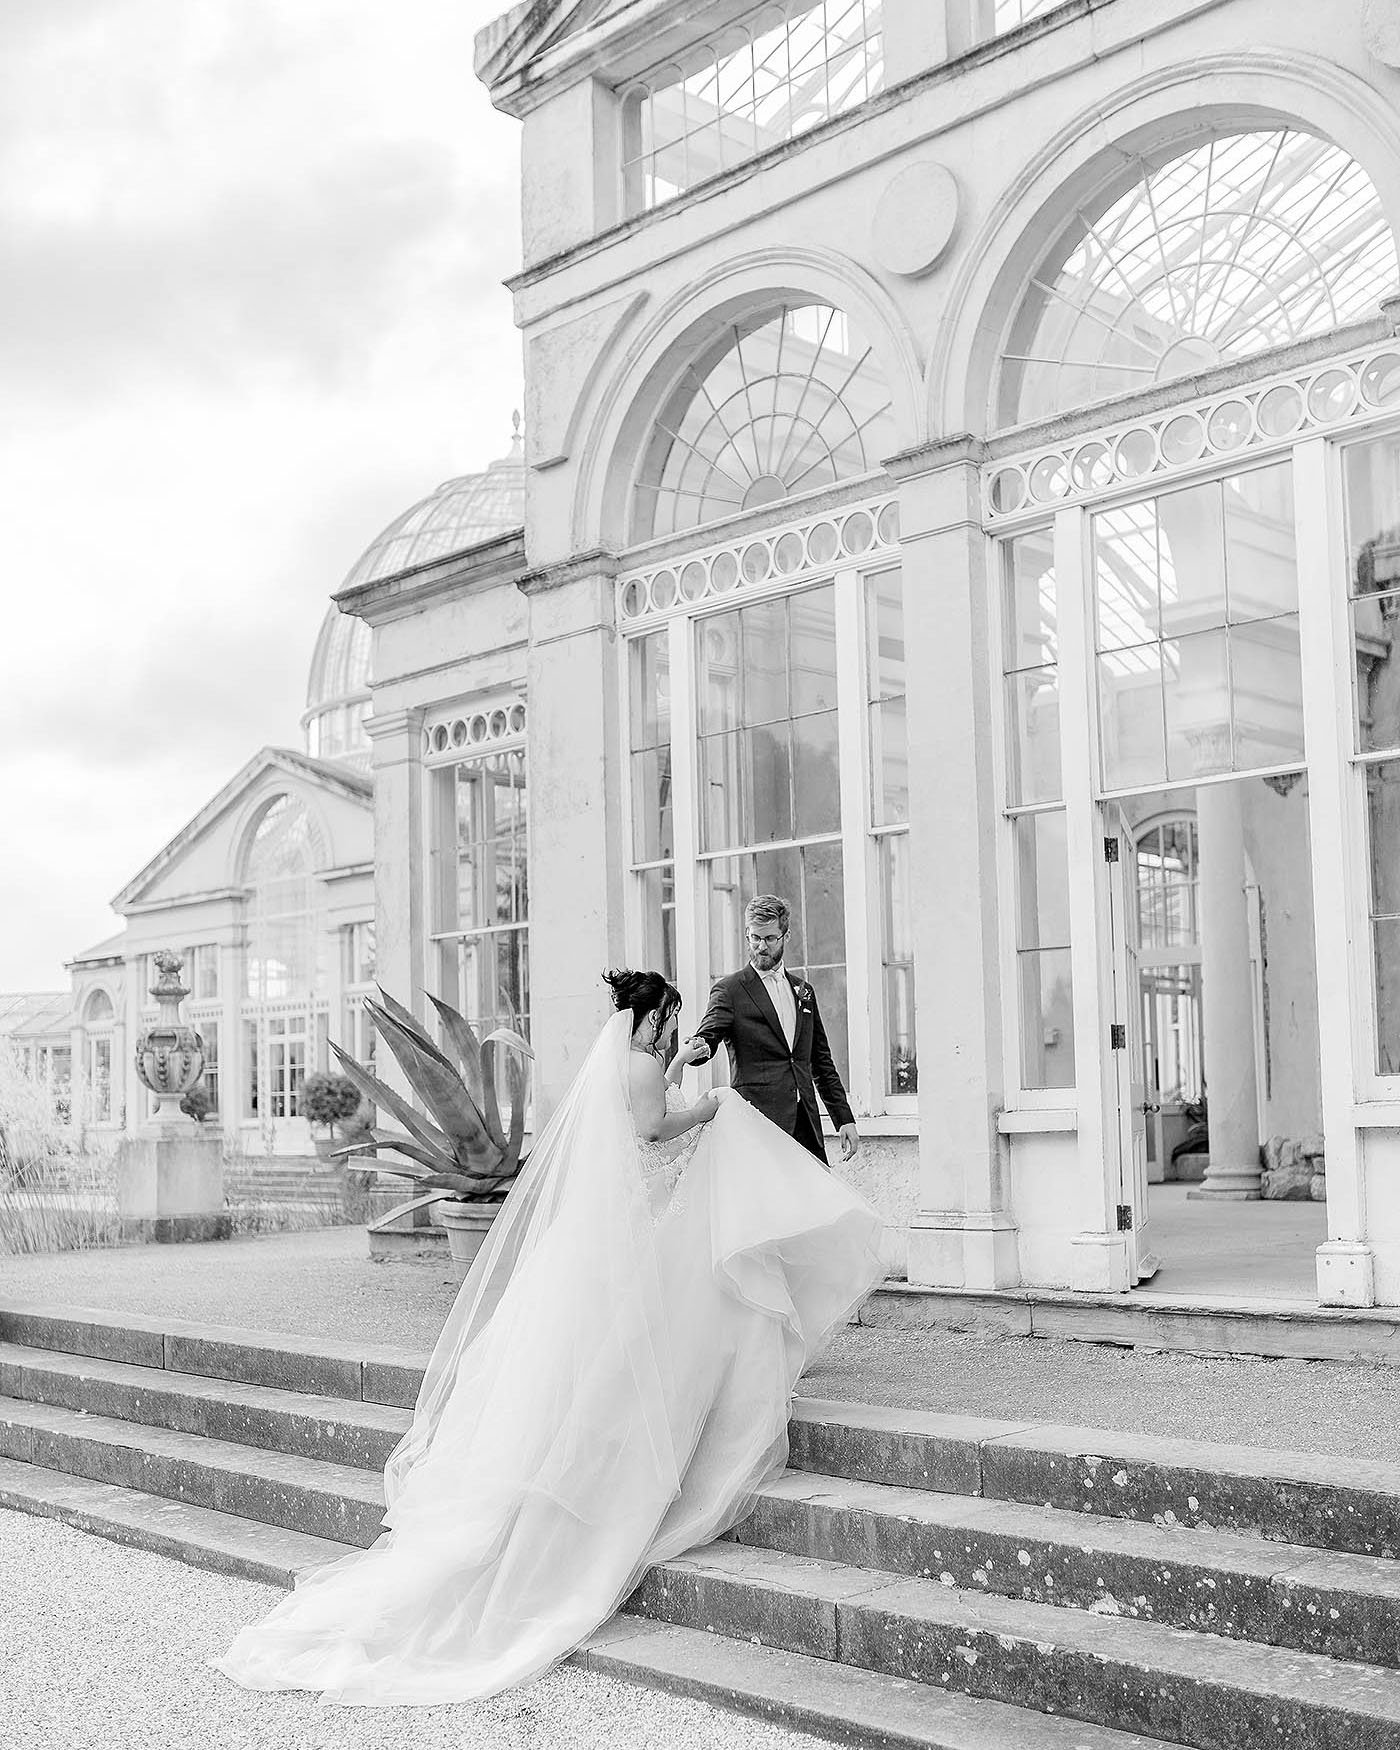 Syon-House-Wedding-Photography-bw copy.jpg